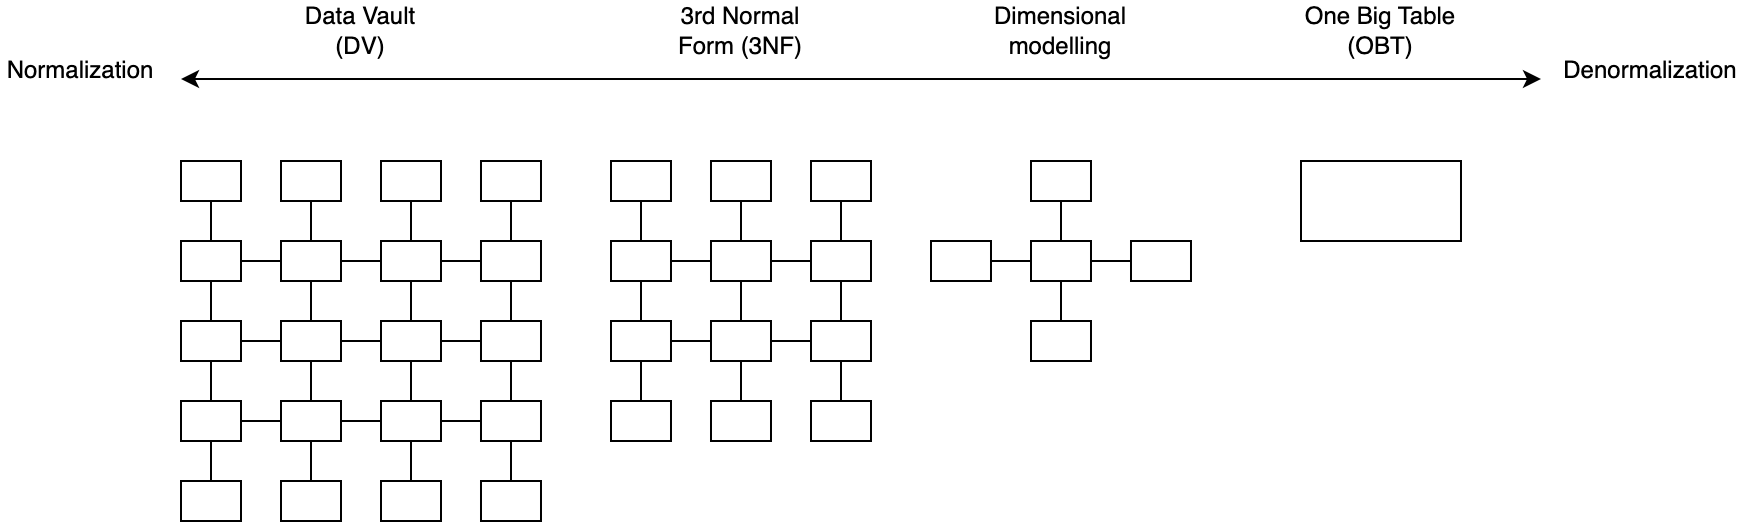 Data modeling techniques on a normalization vs denormalization scale